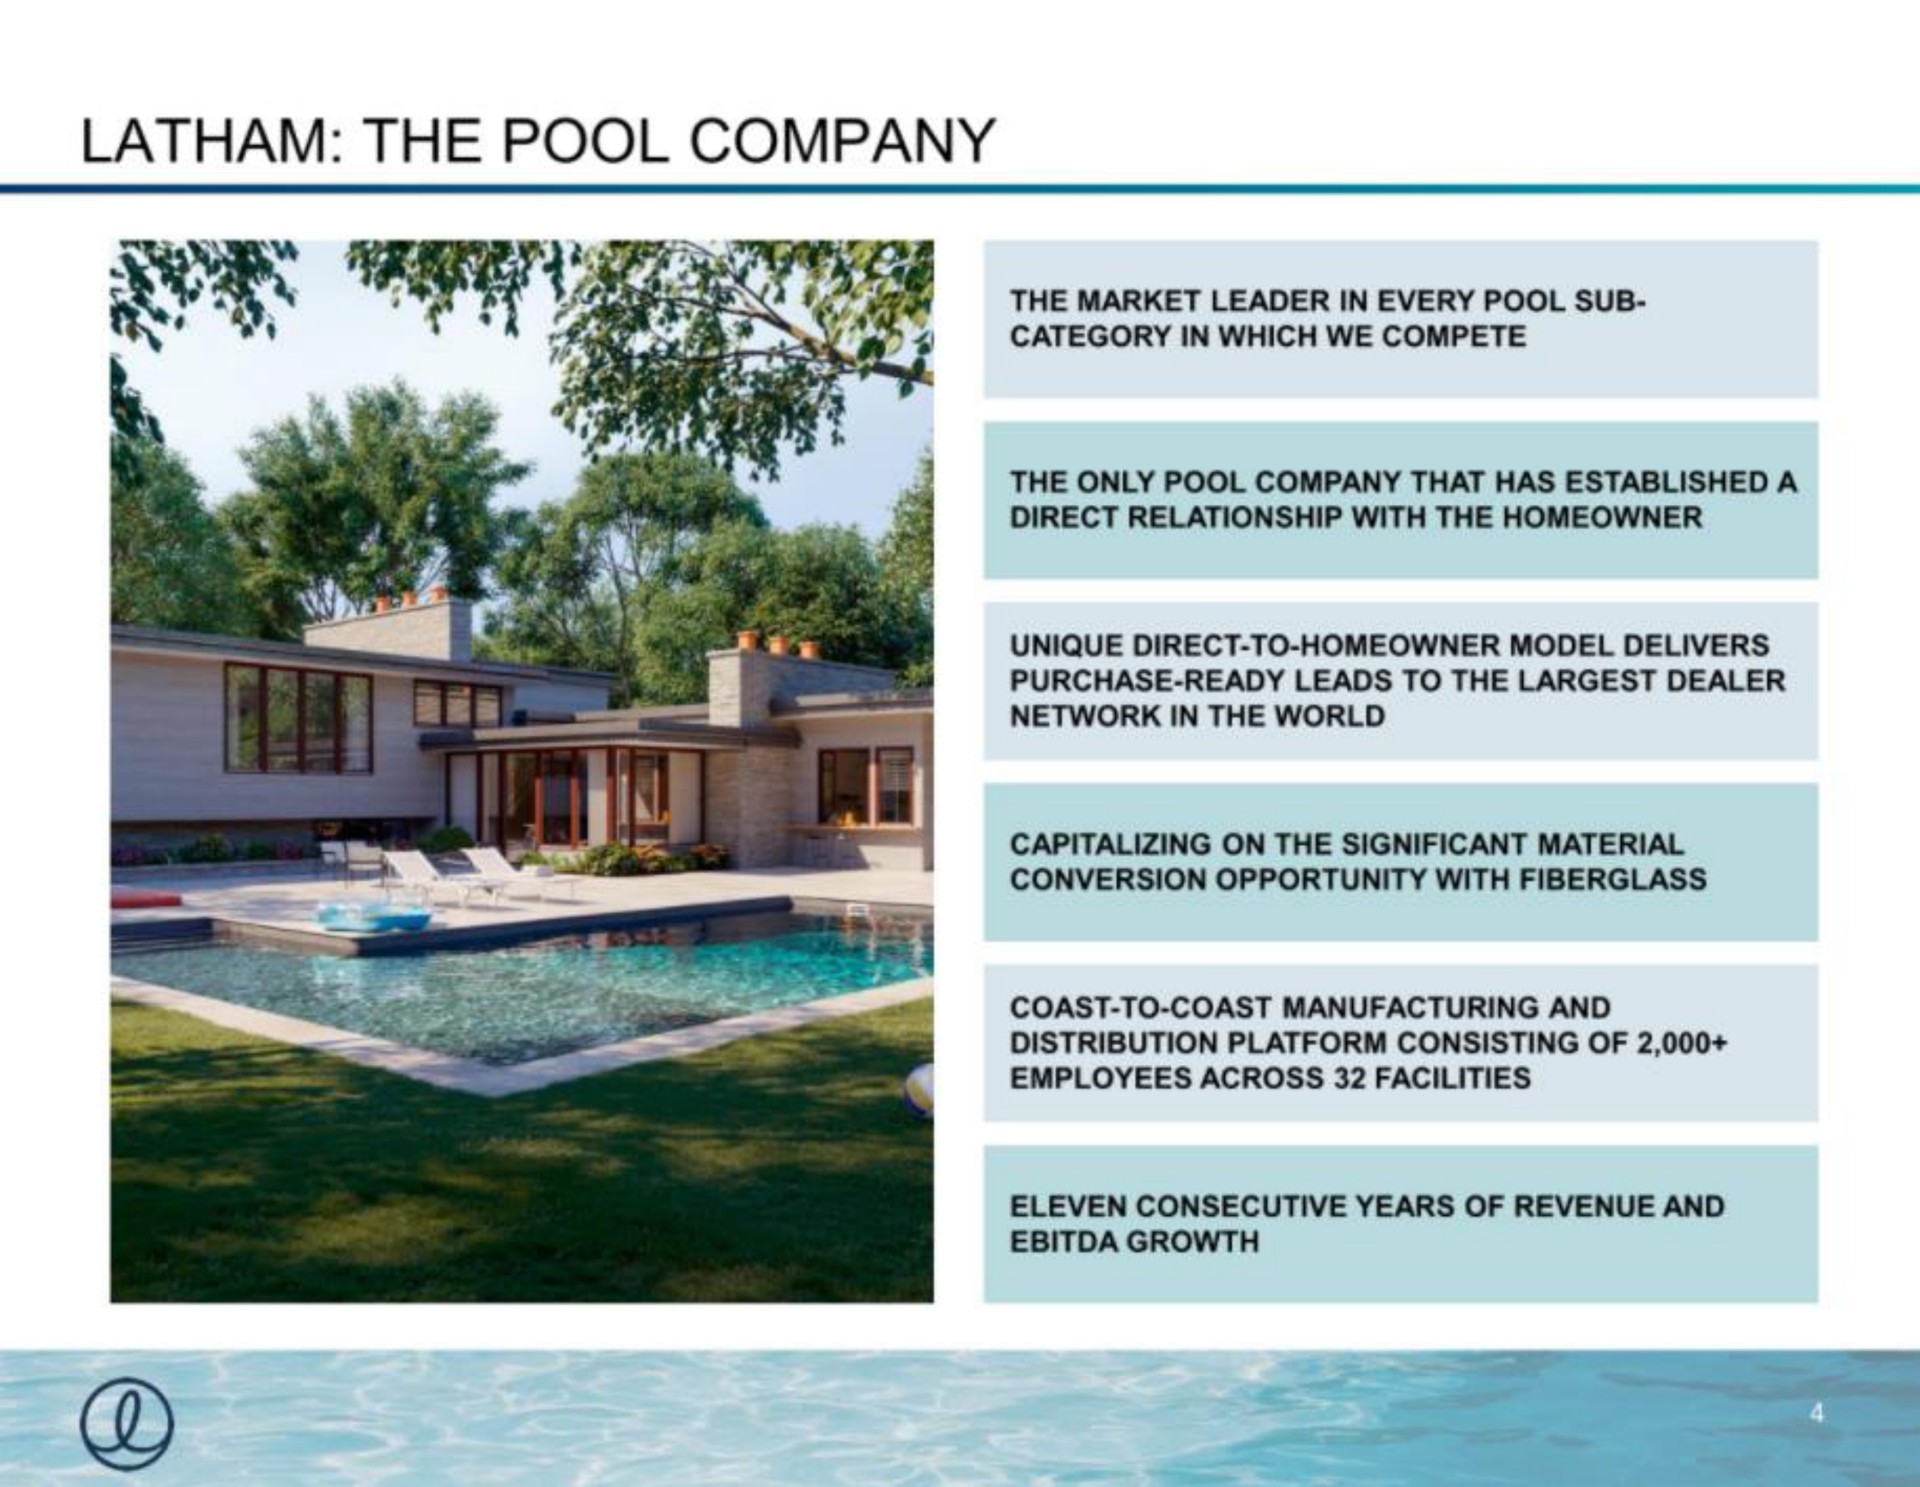 the pool company | Latham Pool Company